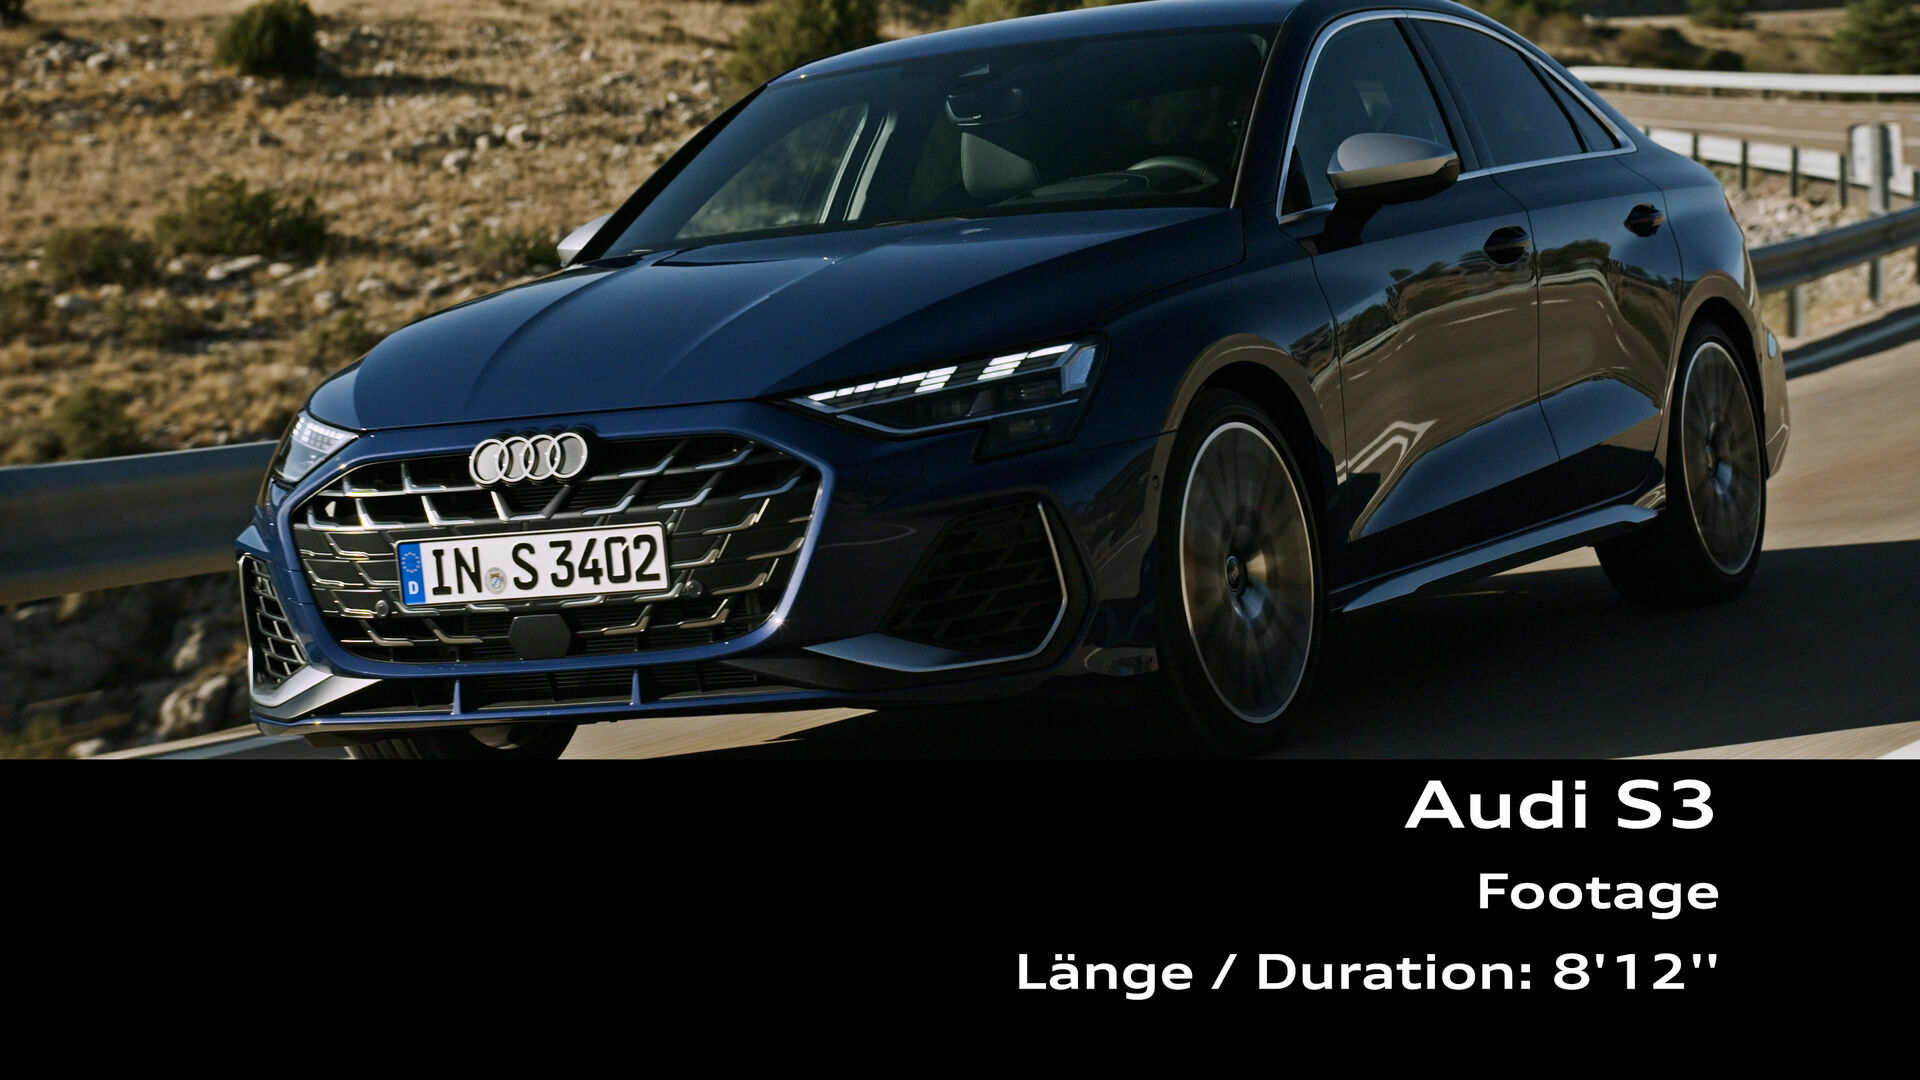 Audi S3 Sedan – Footage (dynamic)